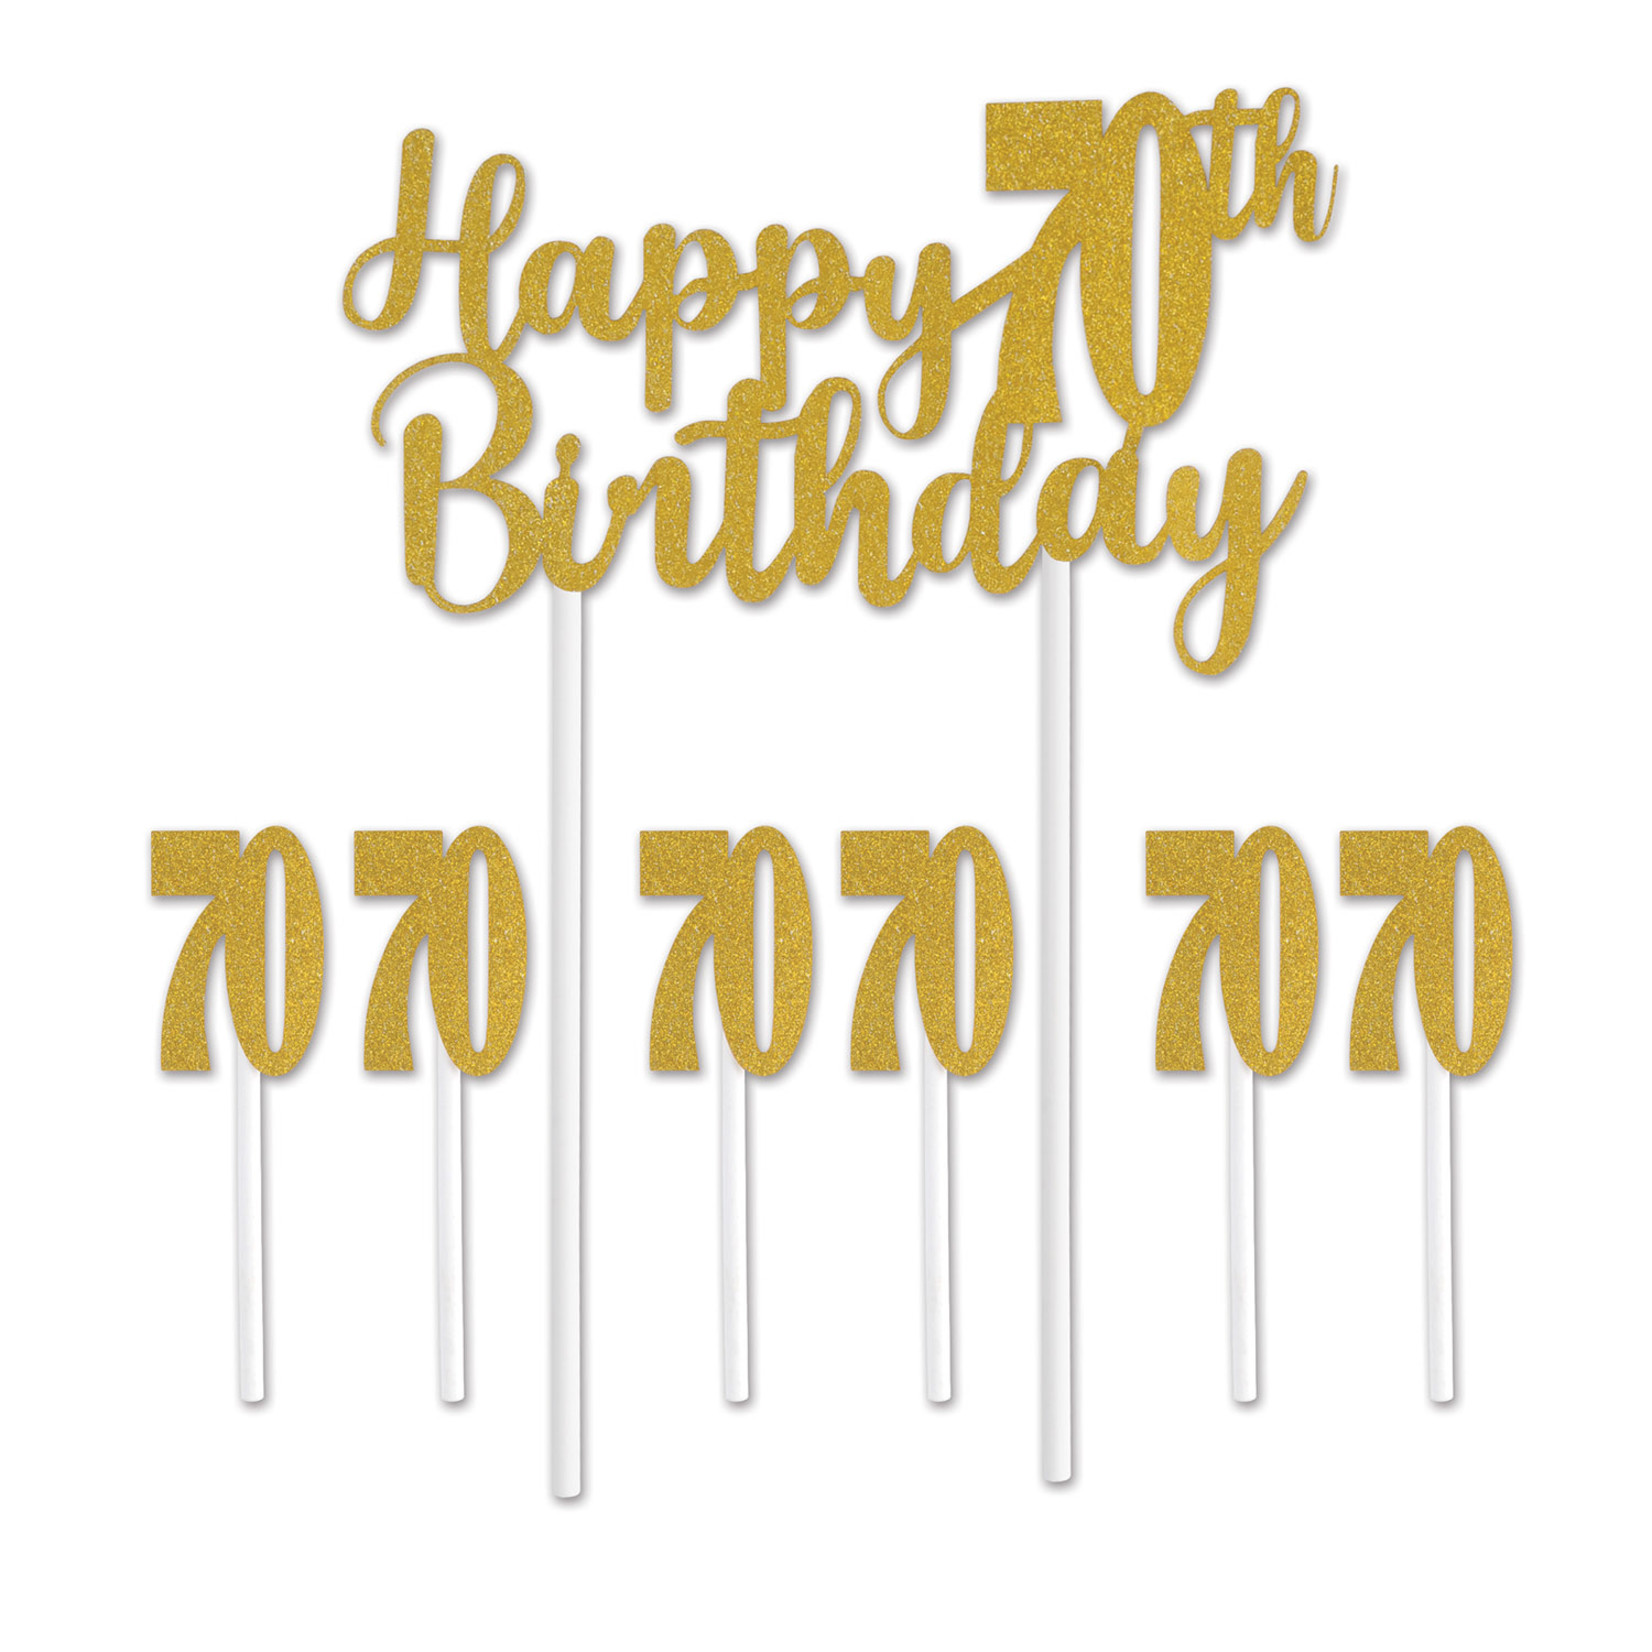 Beistle 70th Birthday Cake topper